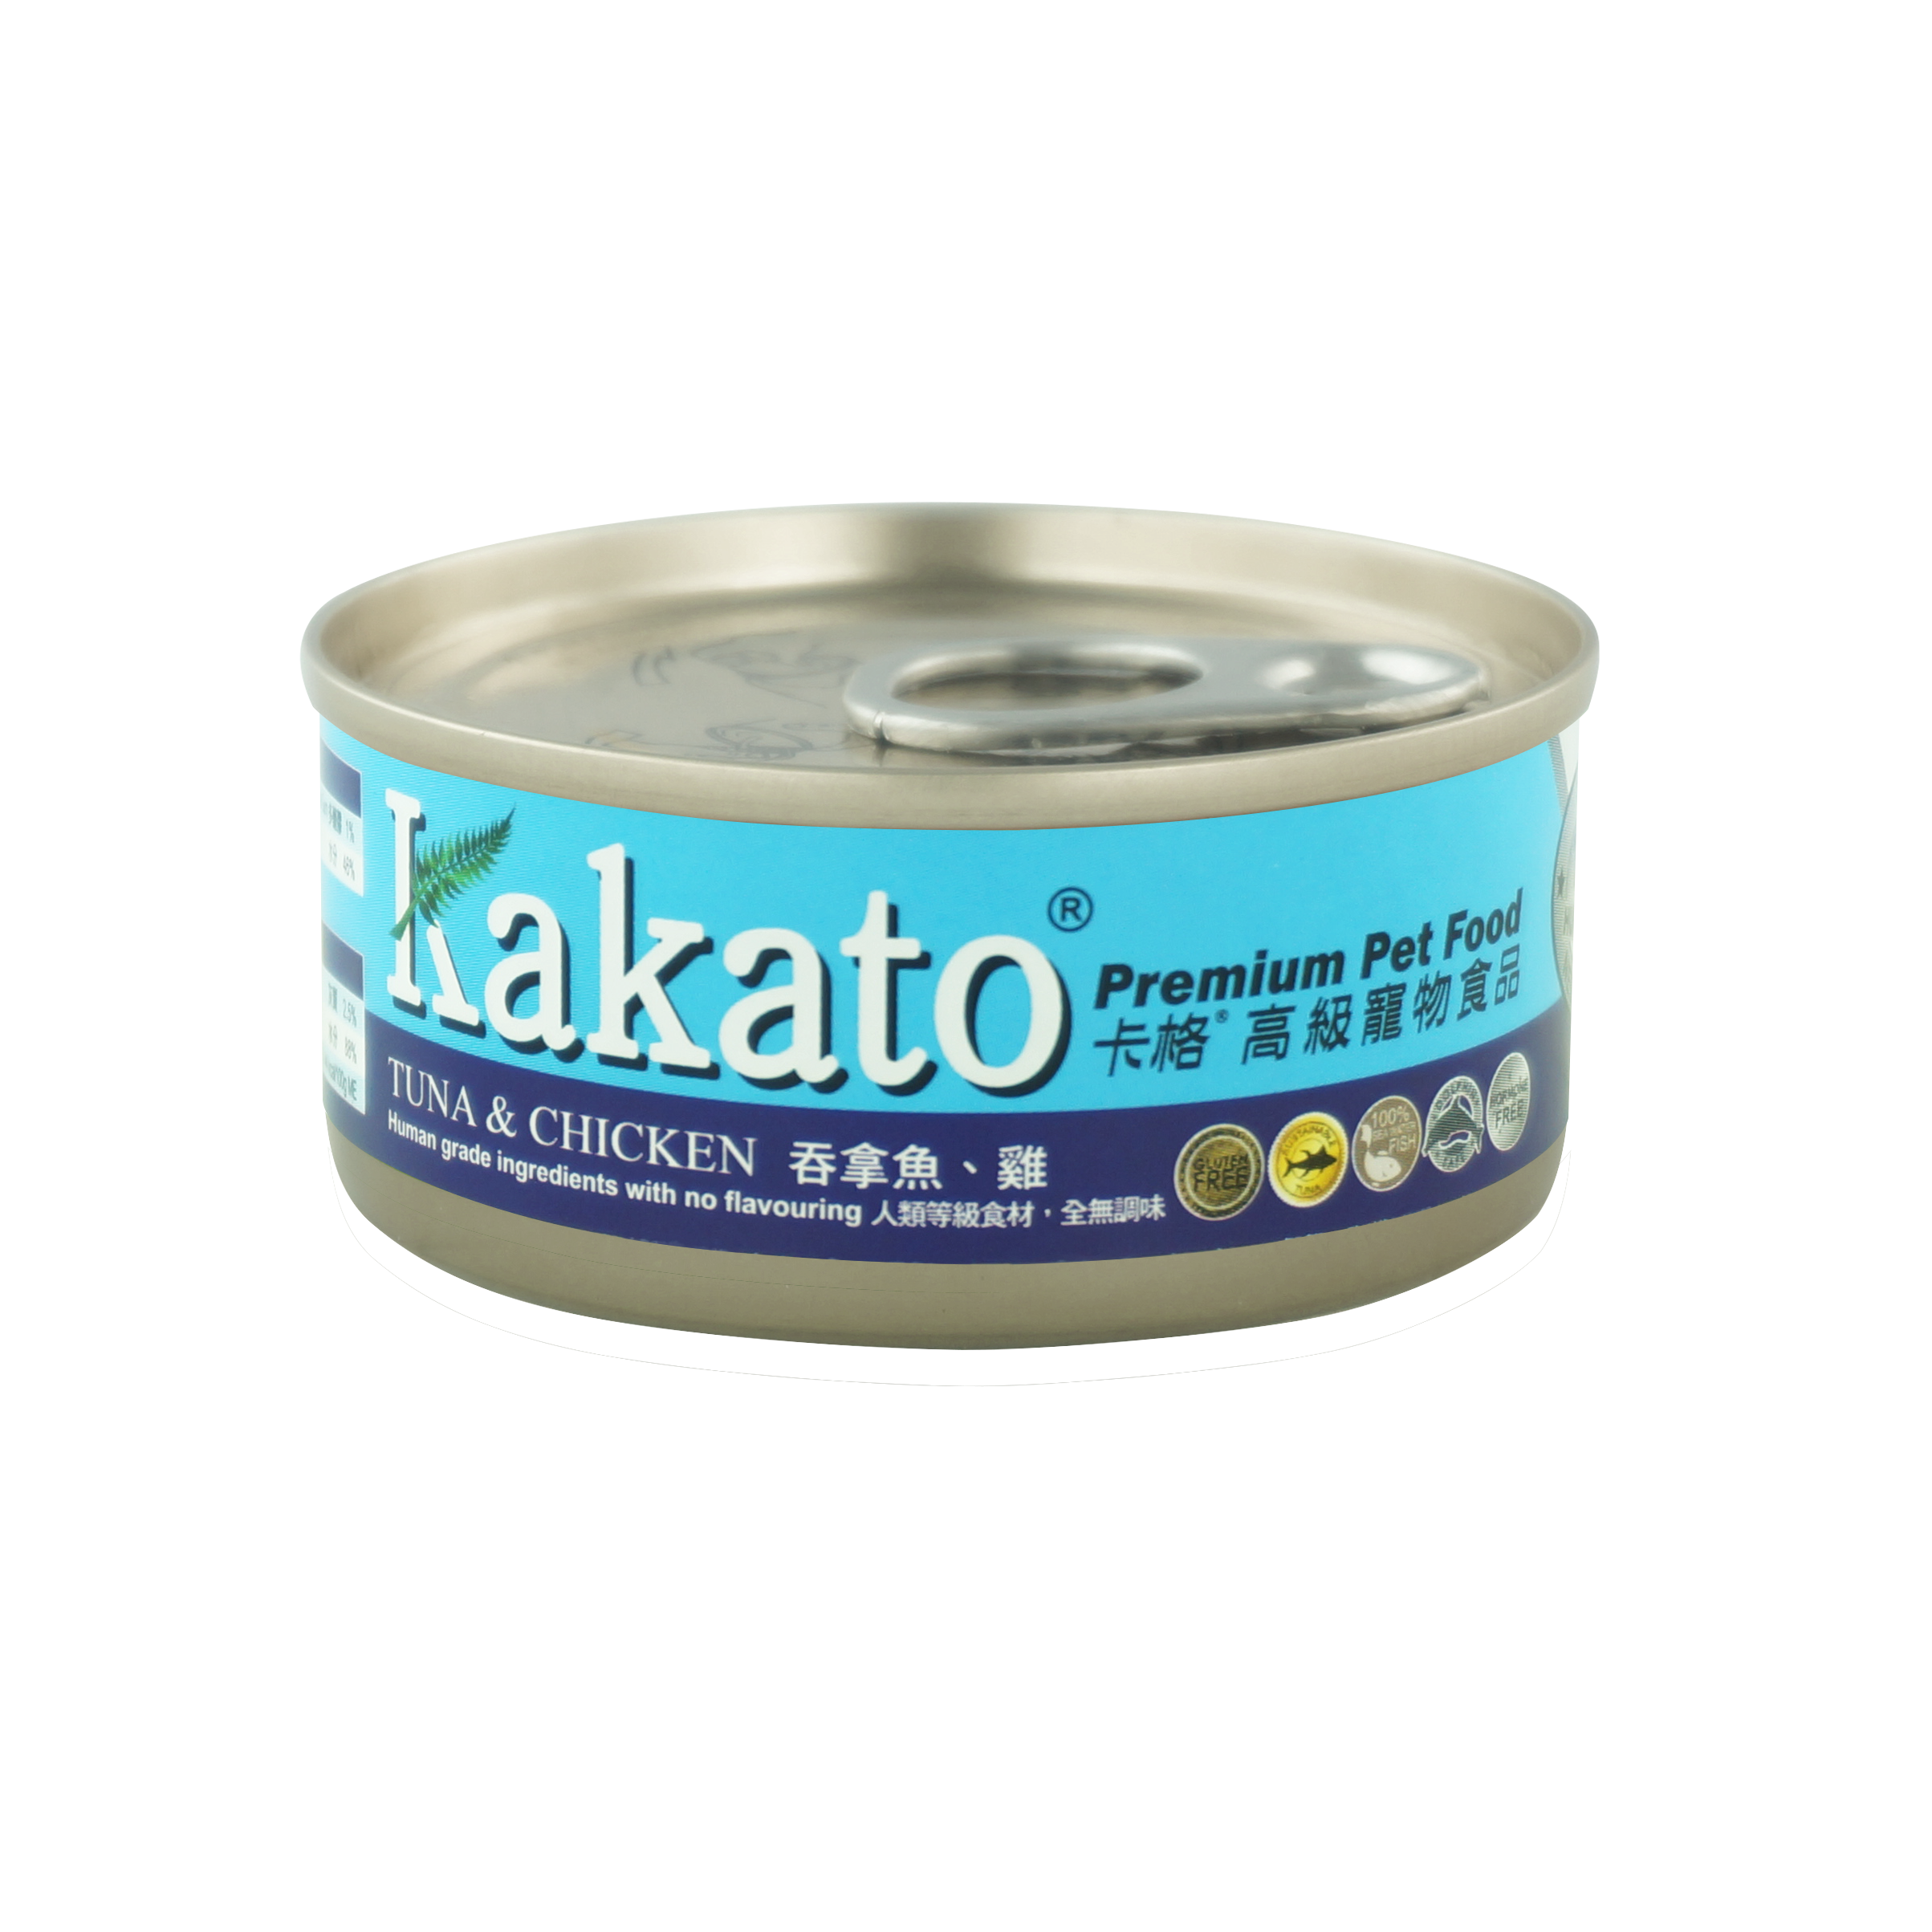 kakato-chicken-and-tuna-product shot